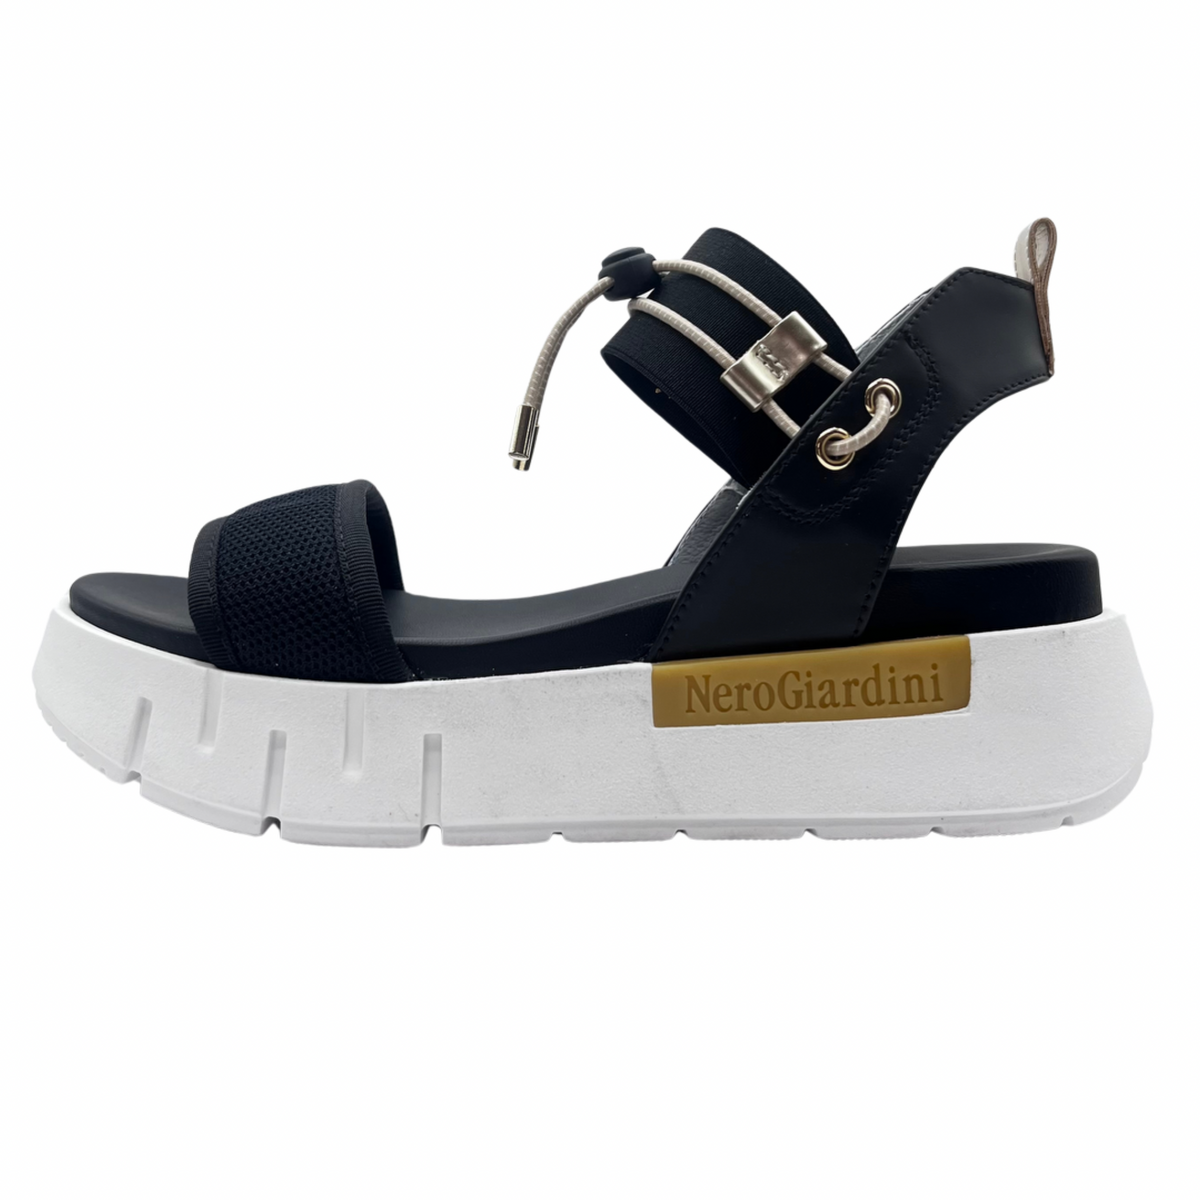 Nero Giardini Black Wedge Sandal With Gold Detail